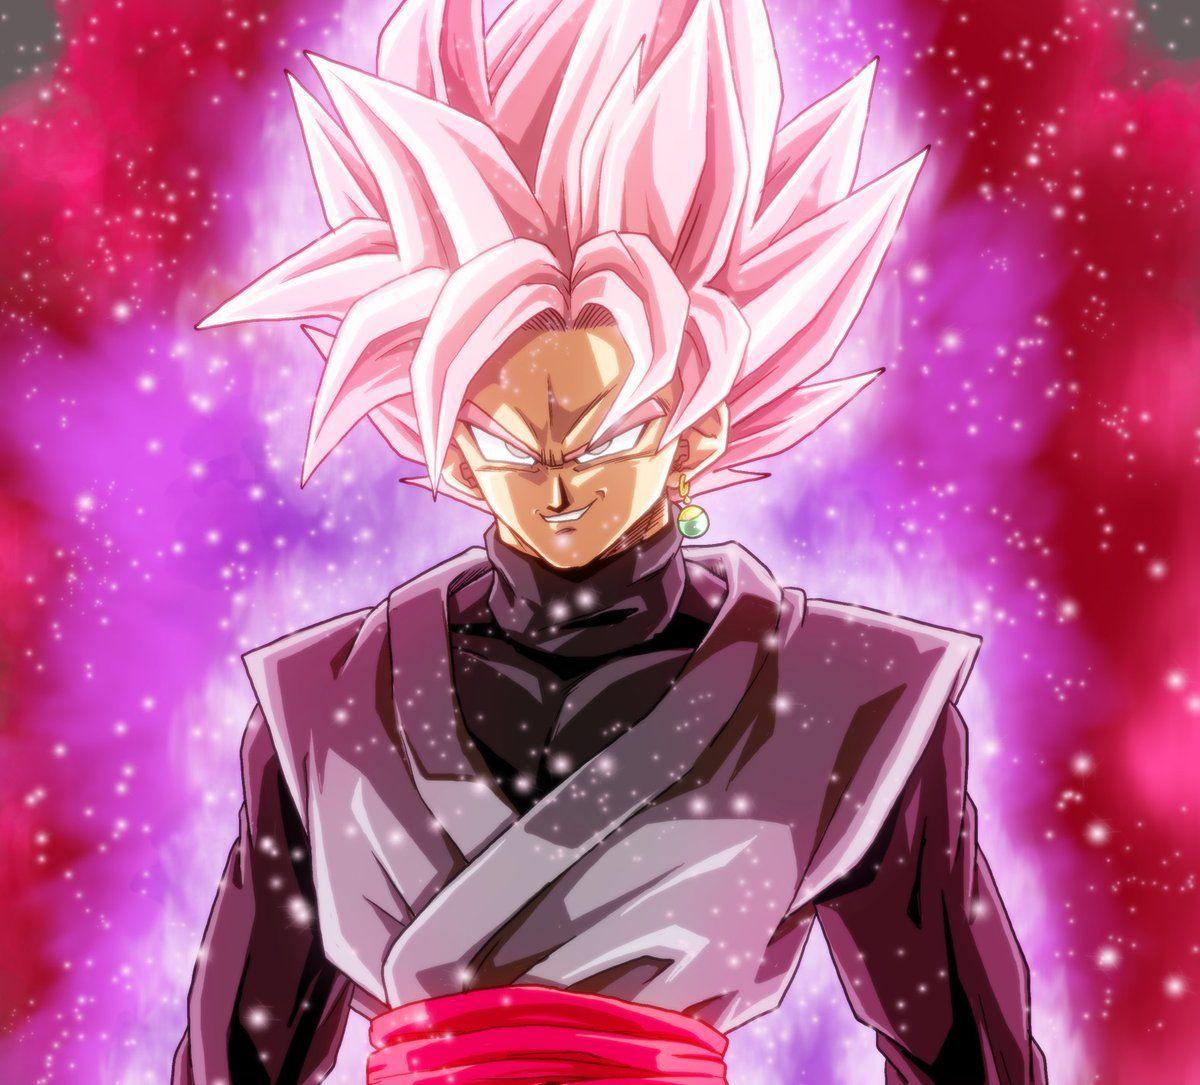 Goku Black Super Saiyan Rose by Gokussj20